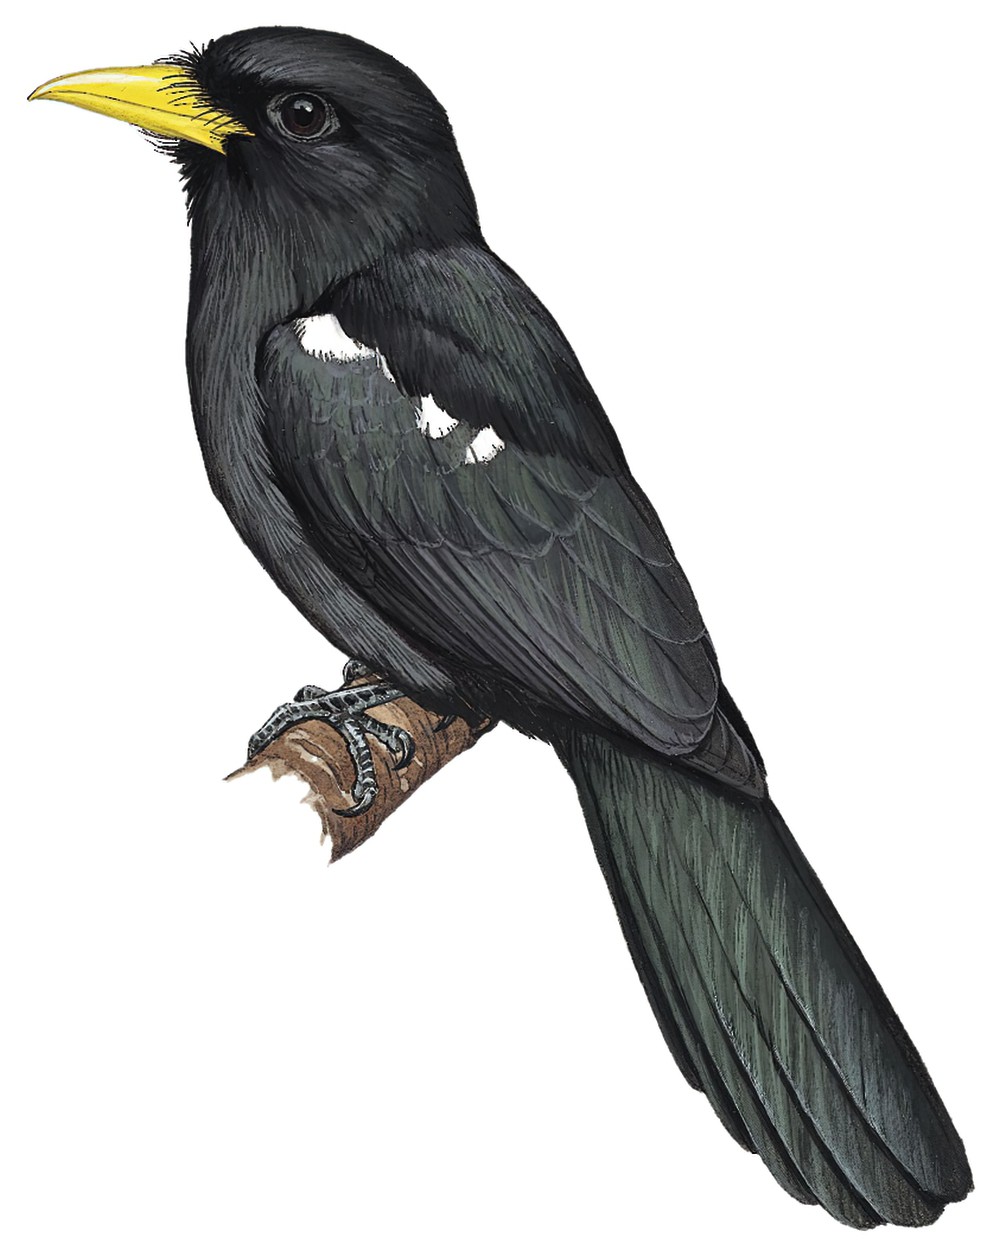 Yellow-billed Nunbird / Monasa flavirostris